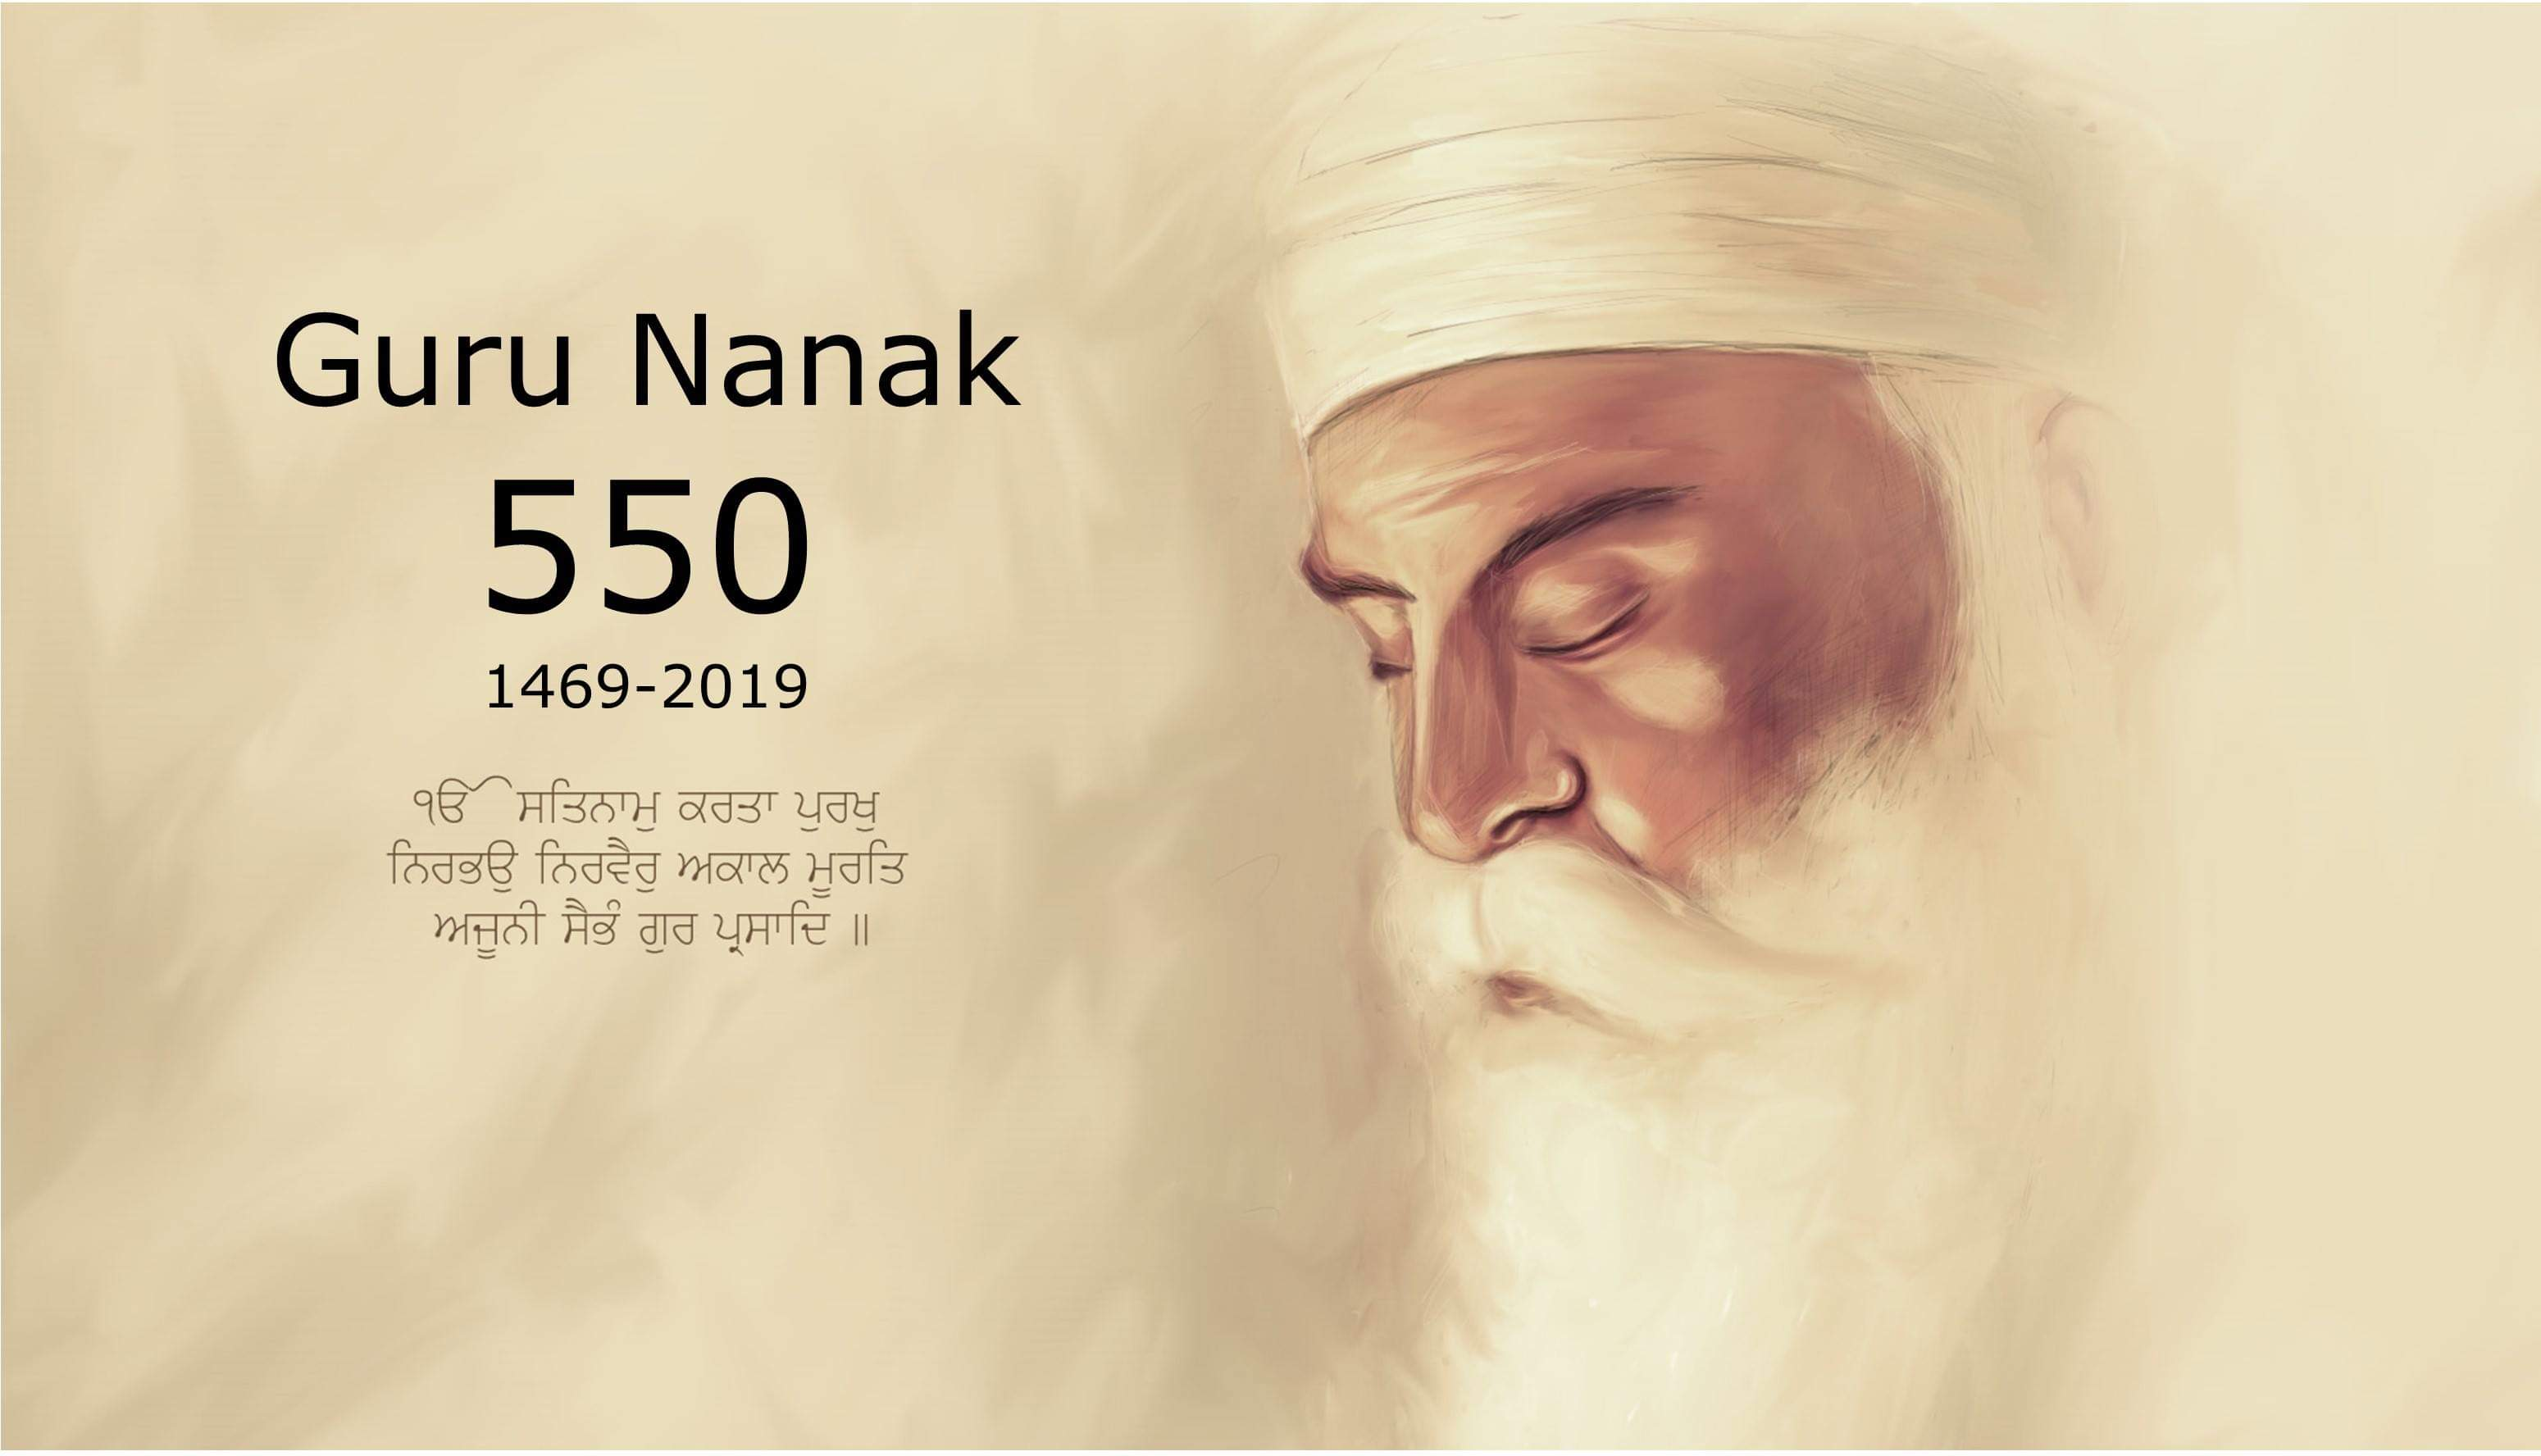 Ki volt Guru Nanak?